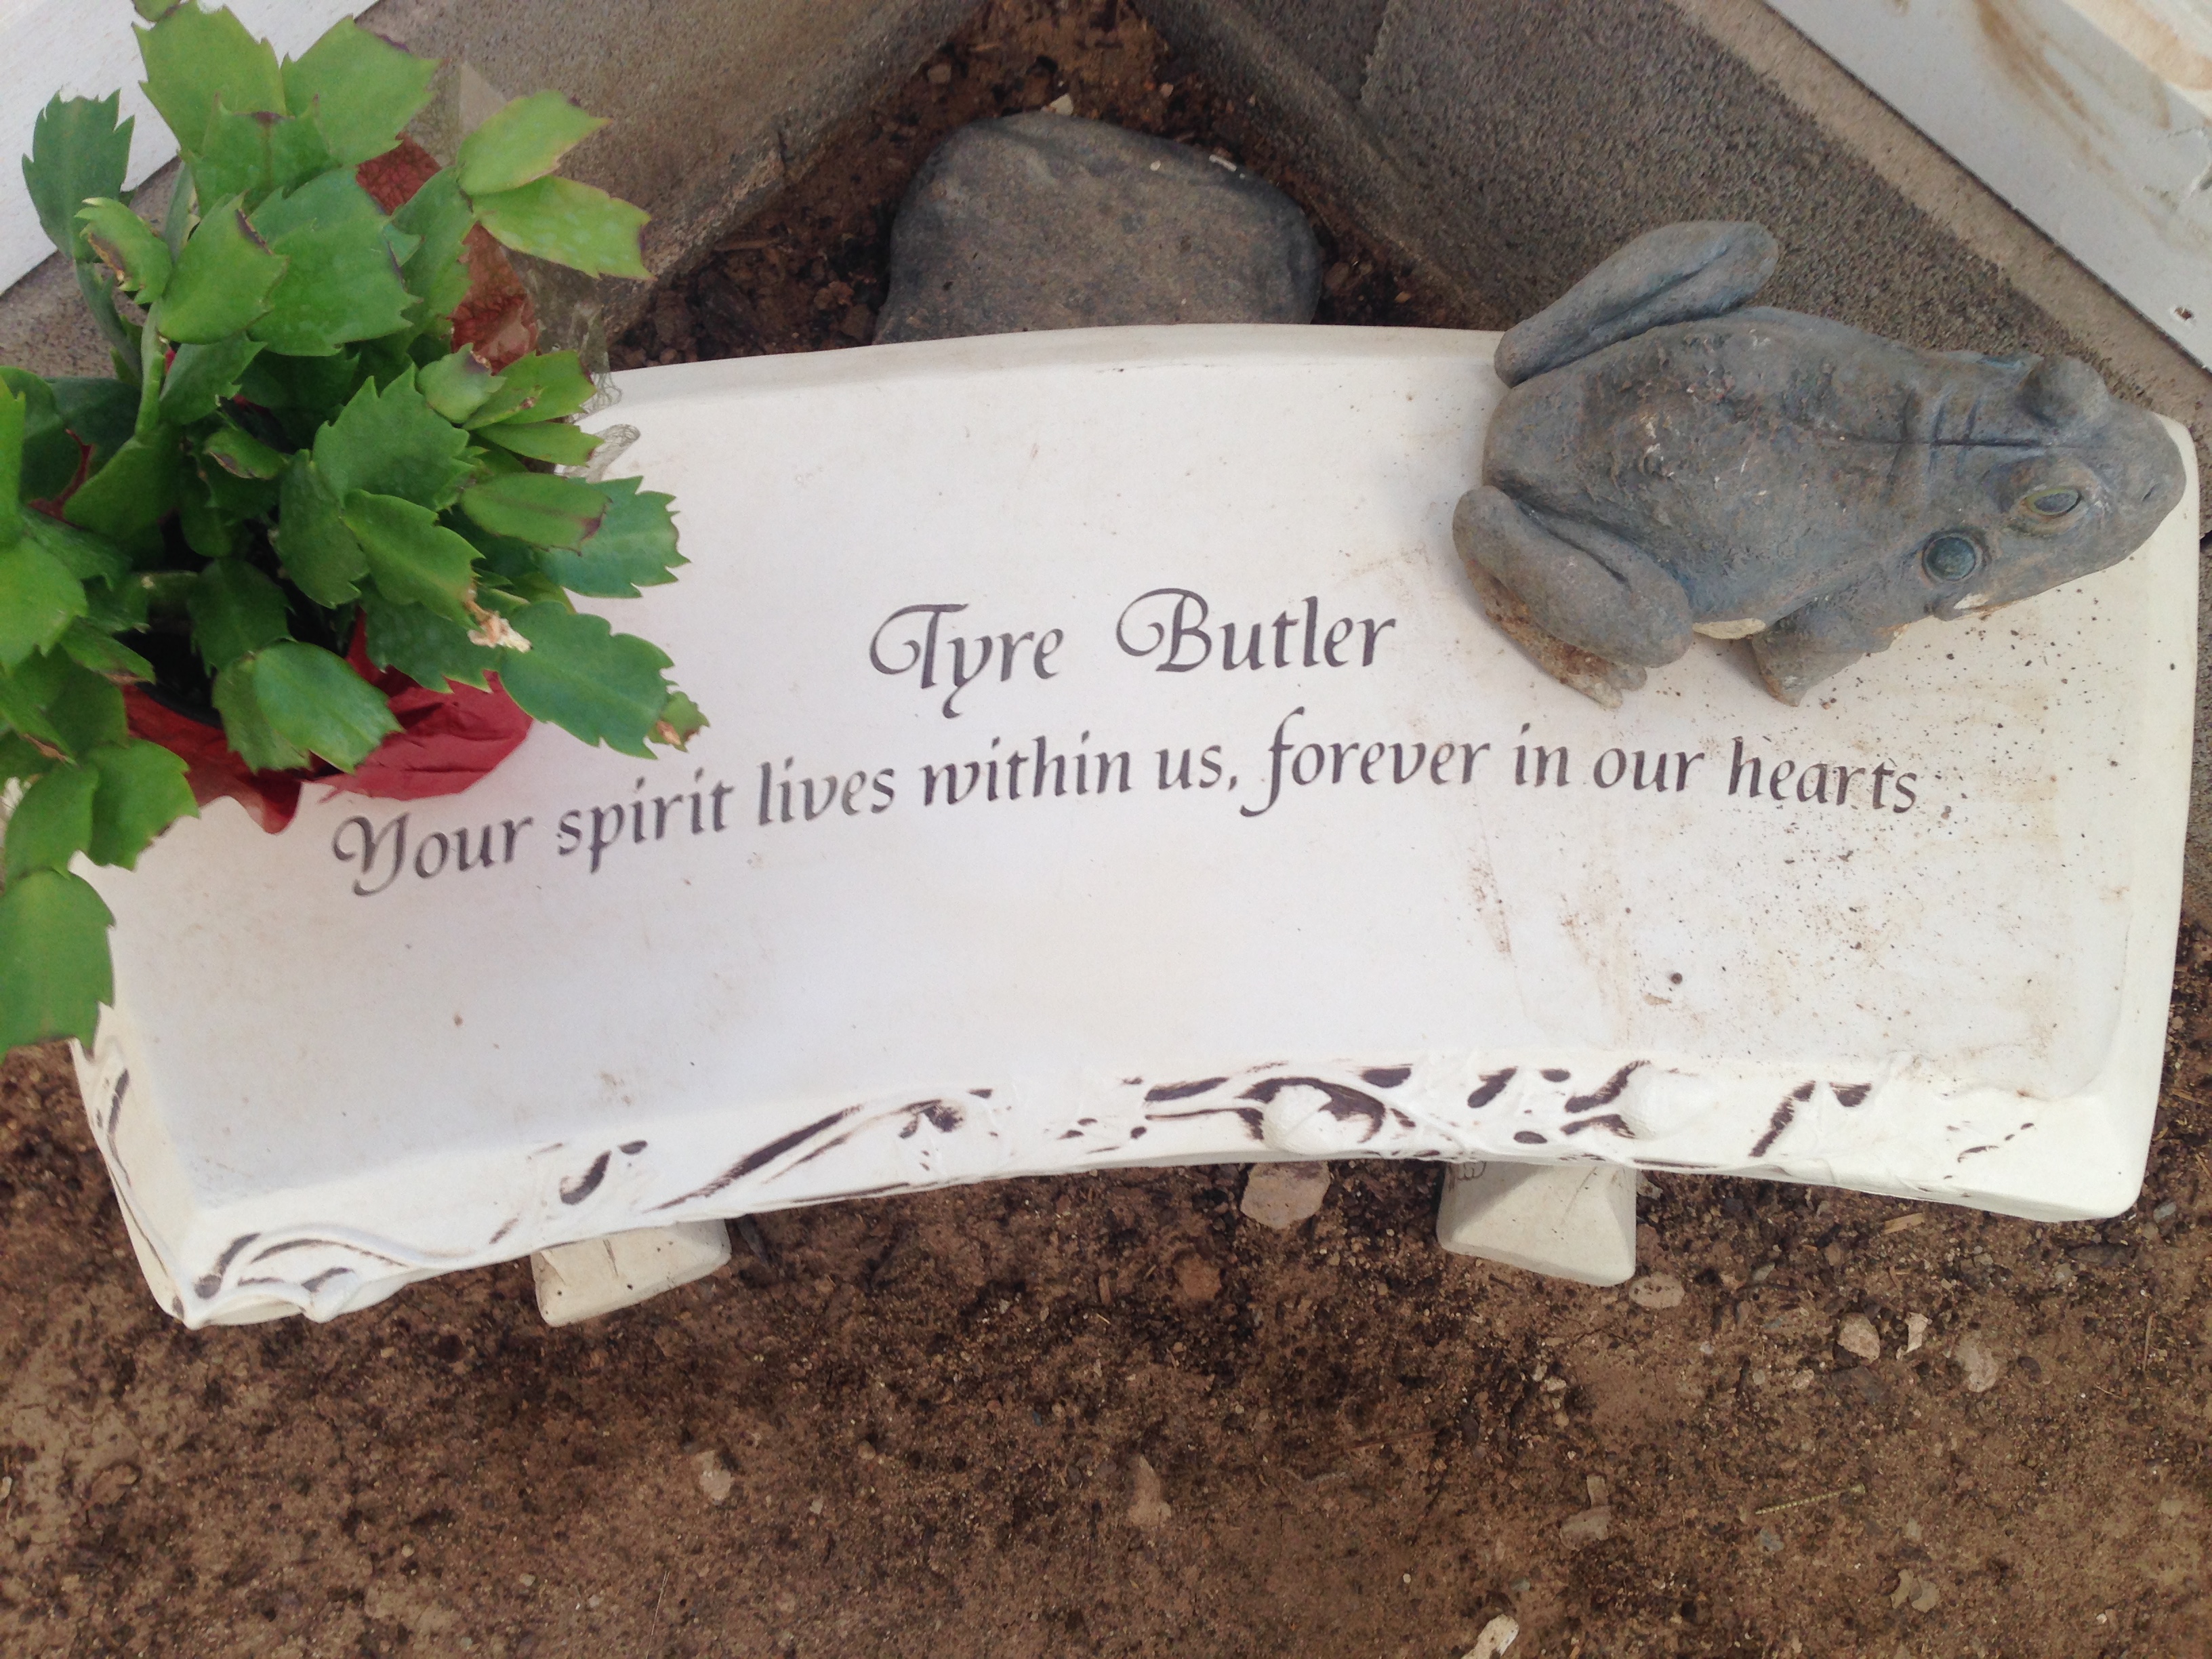 KTAR News Visits Tyre Butler Memorial Greenhouse